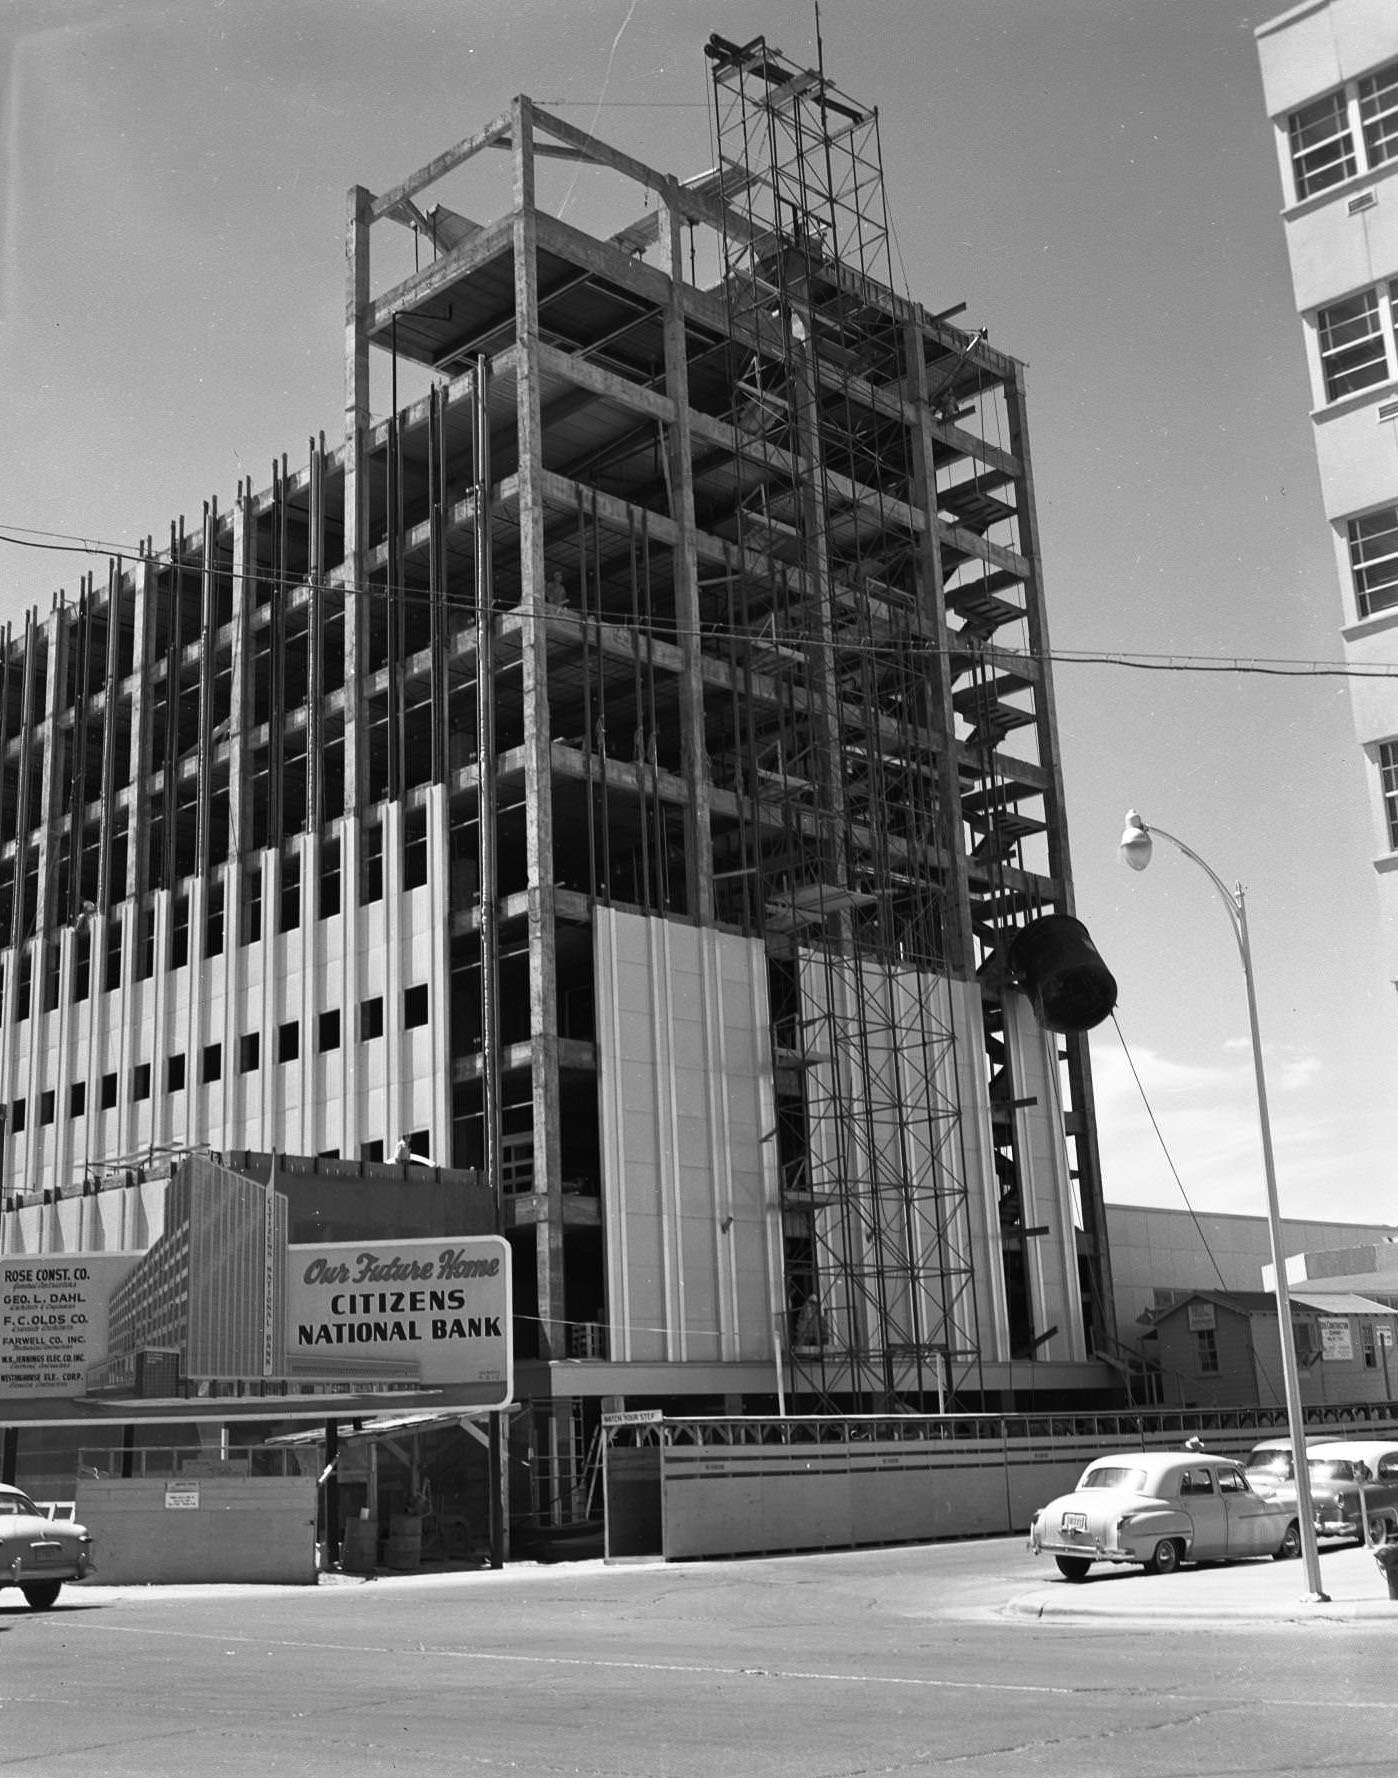 Citizens National Bank Being Built, 1954